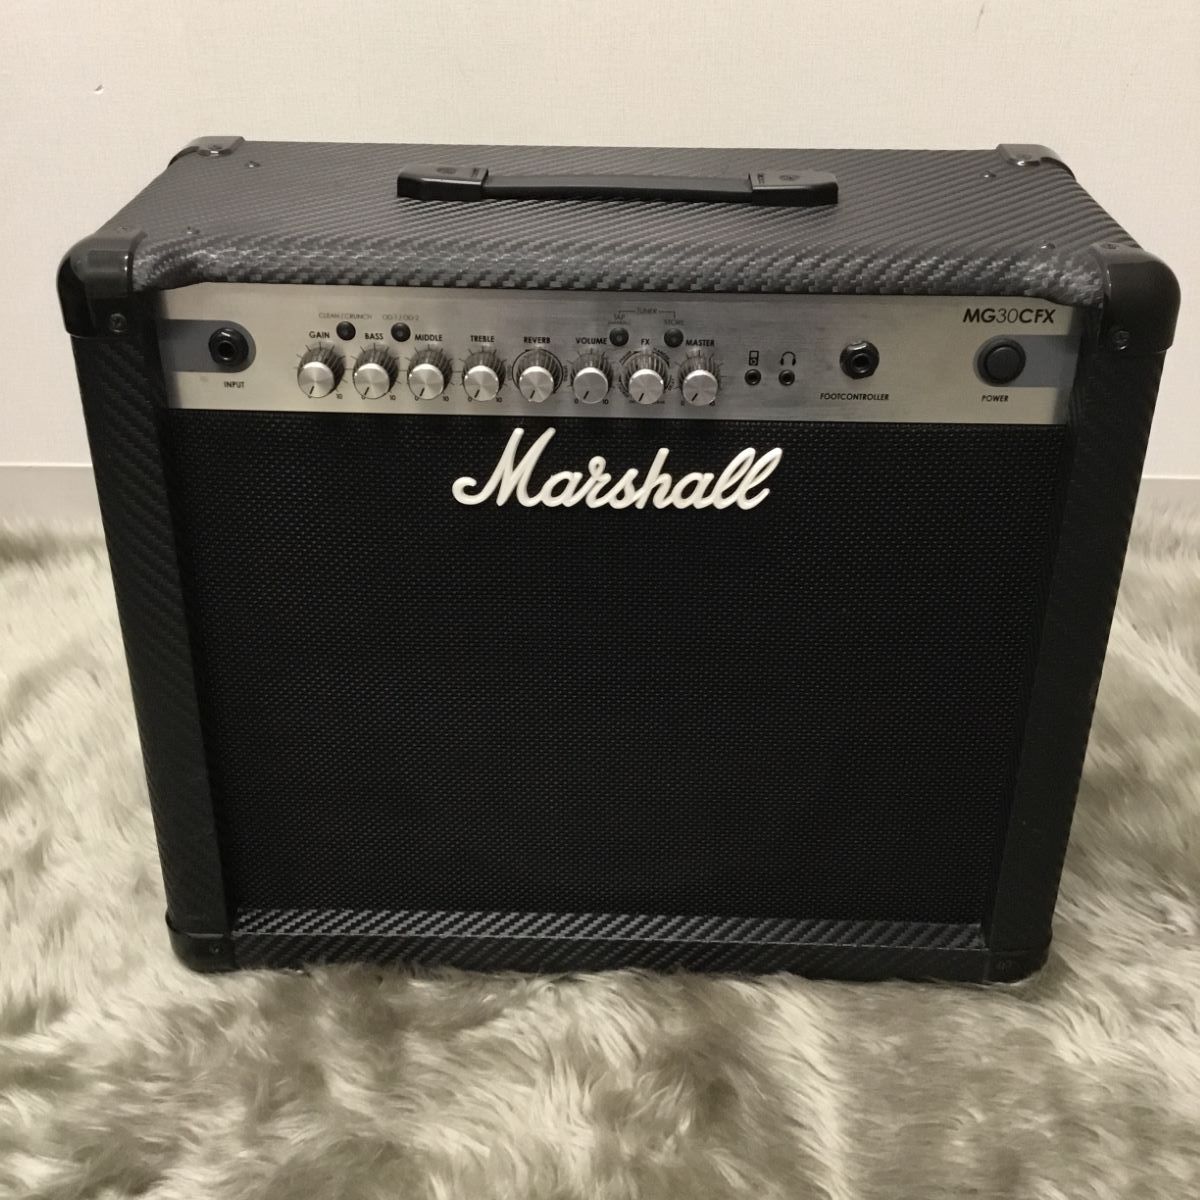 Marshall 【Marshall】MG30CFX【ギターコンボアンプ】 マーシャル